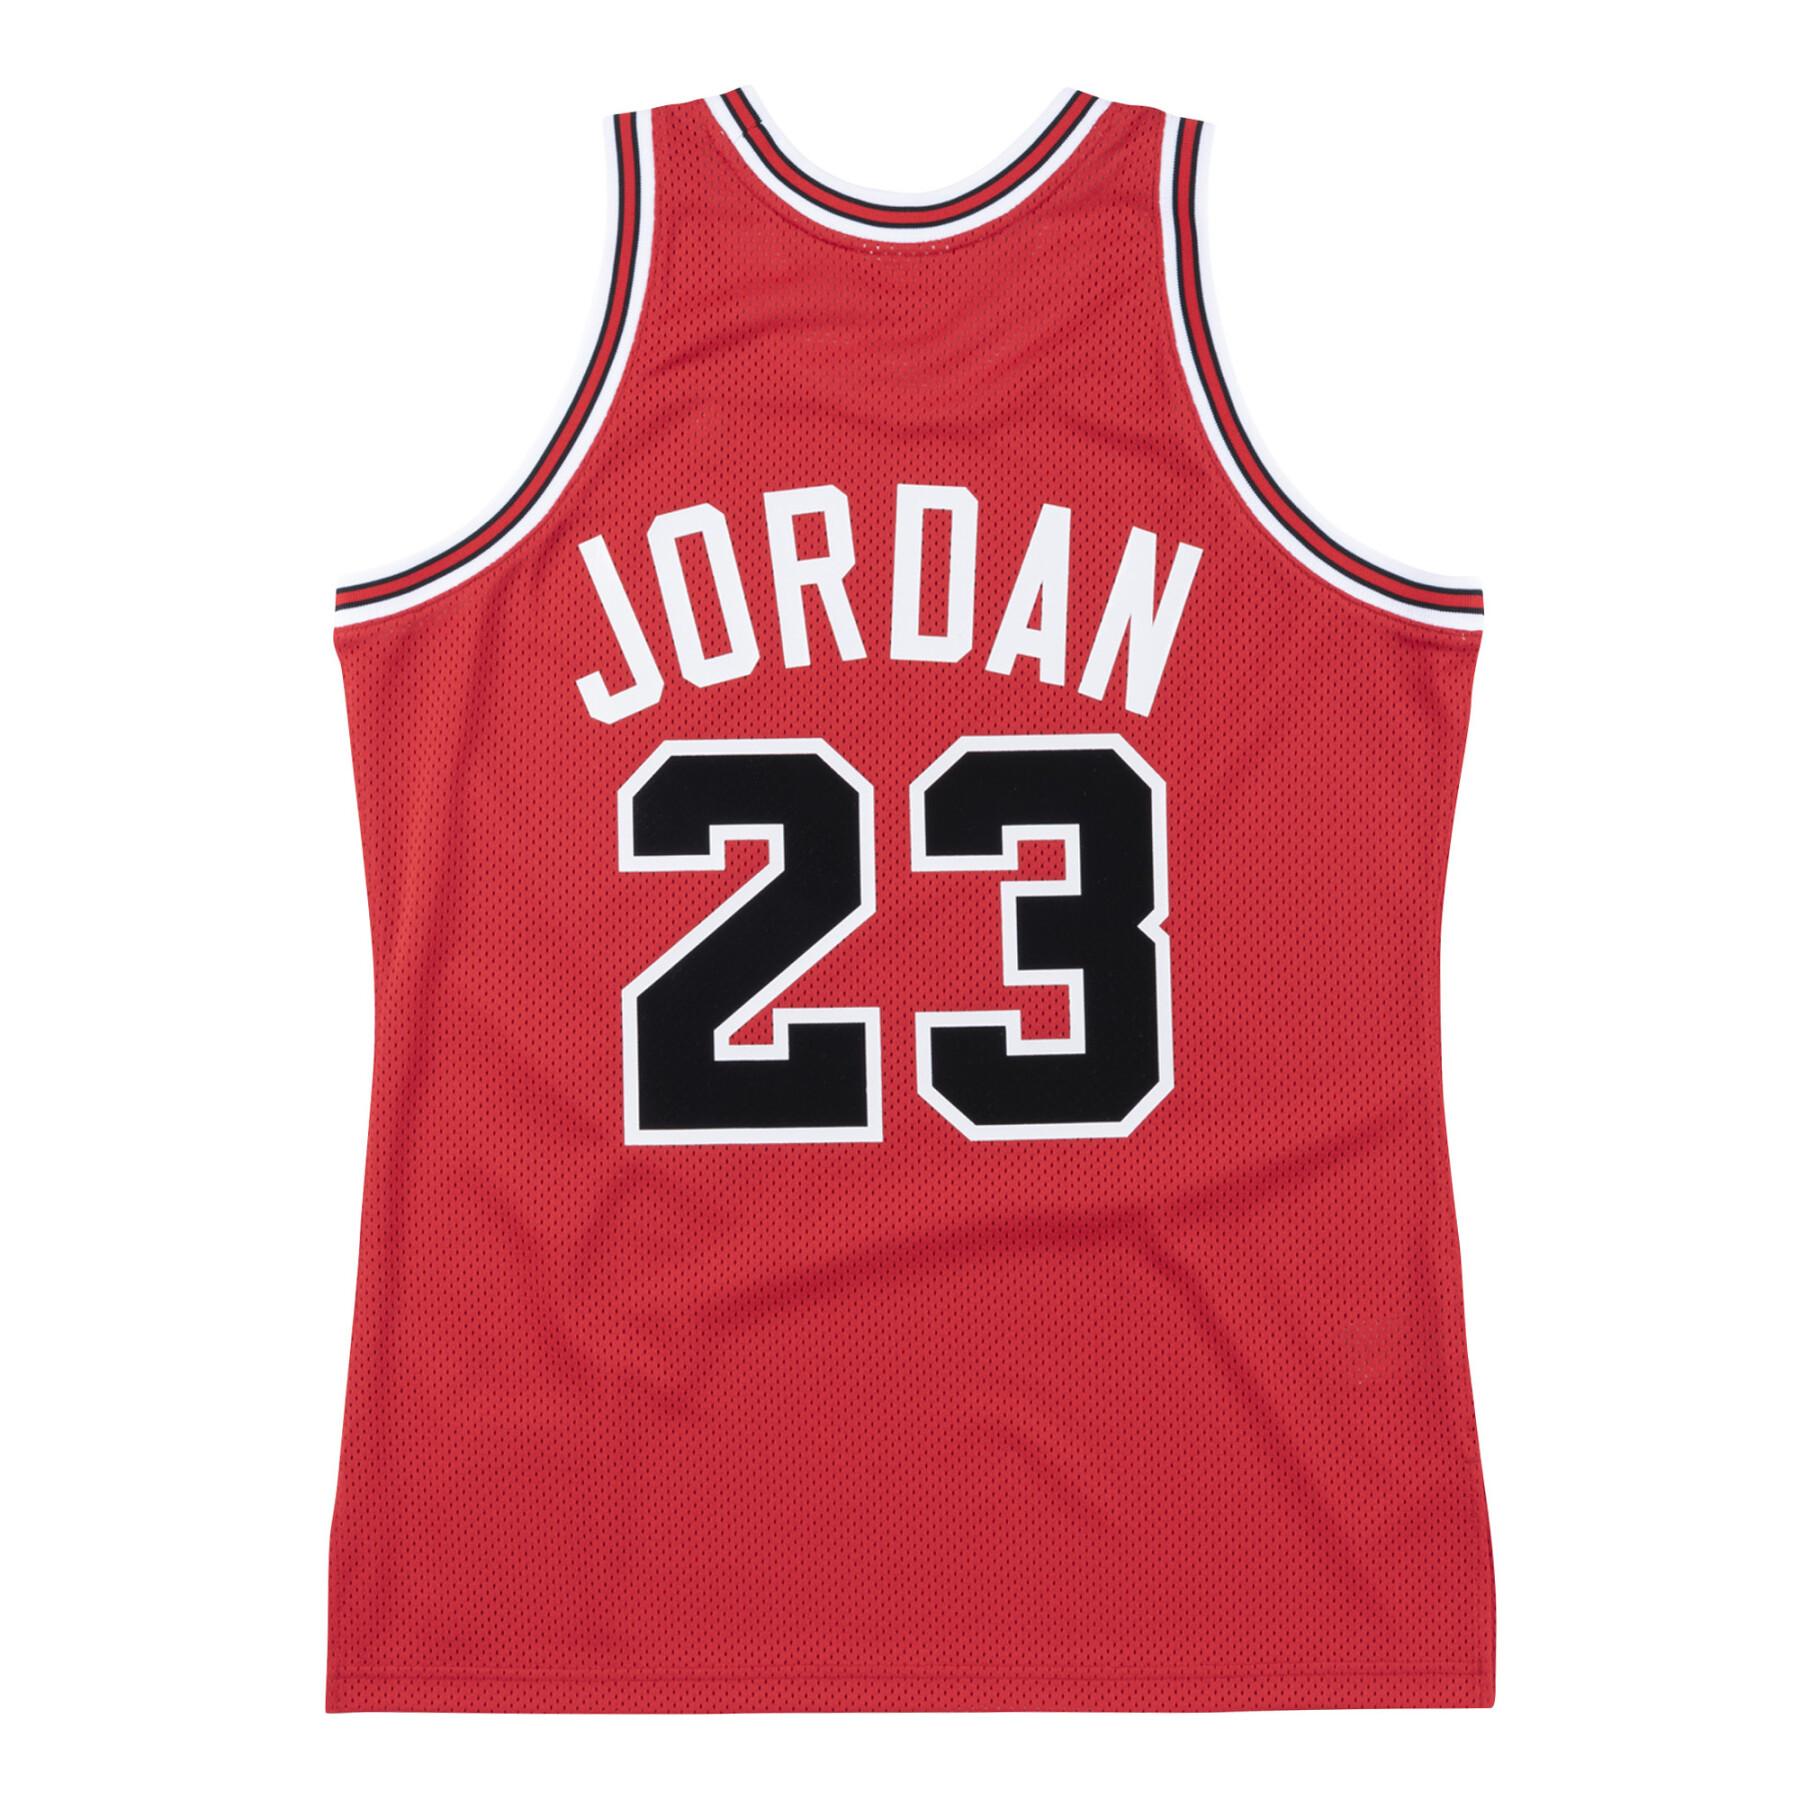 Jersey Chicago Bulls NBA Authentic 1987 Michael Jordan